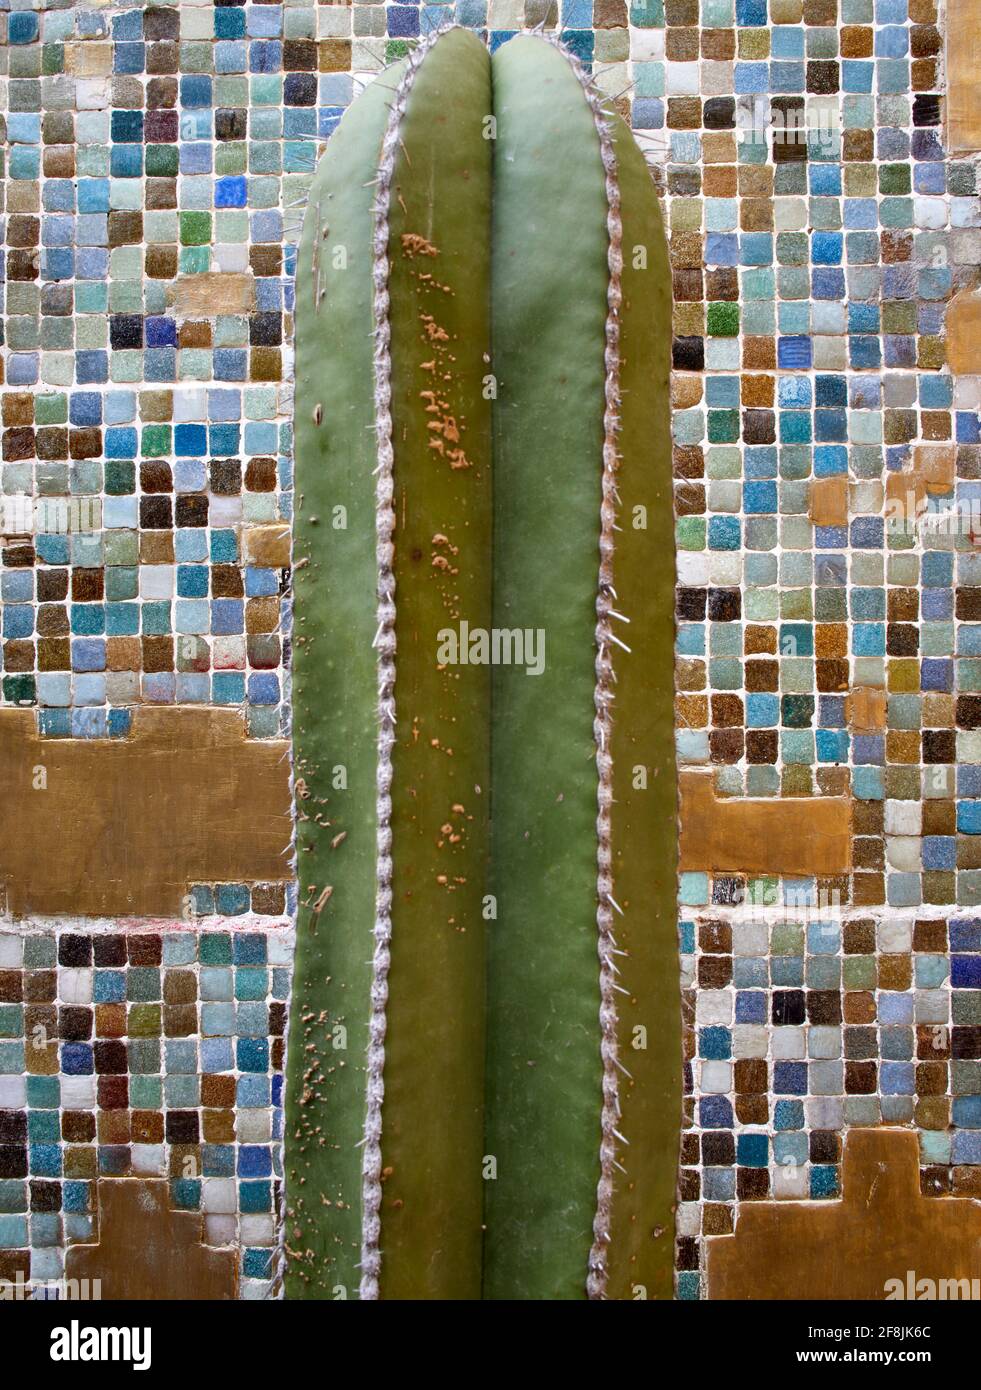 Detail of mosaic wall and cactus. CÓRDOBA 223, Mexico City, Mexico. Architect: BAAQ , 2019. Stock Photo